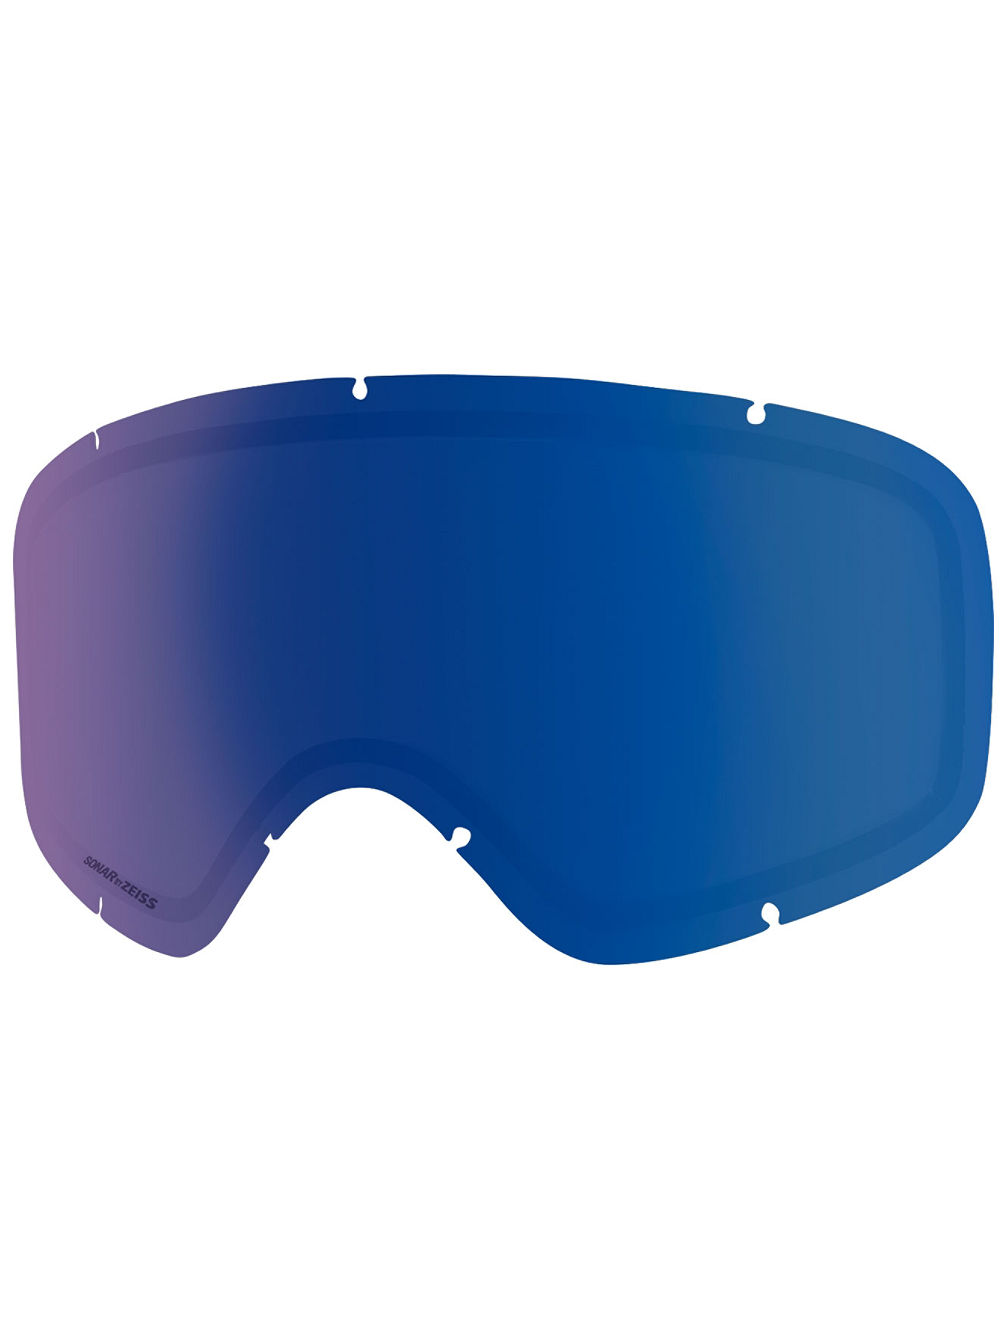 Insight Sonar Lens Sonar Blue Goggle